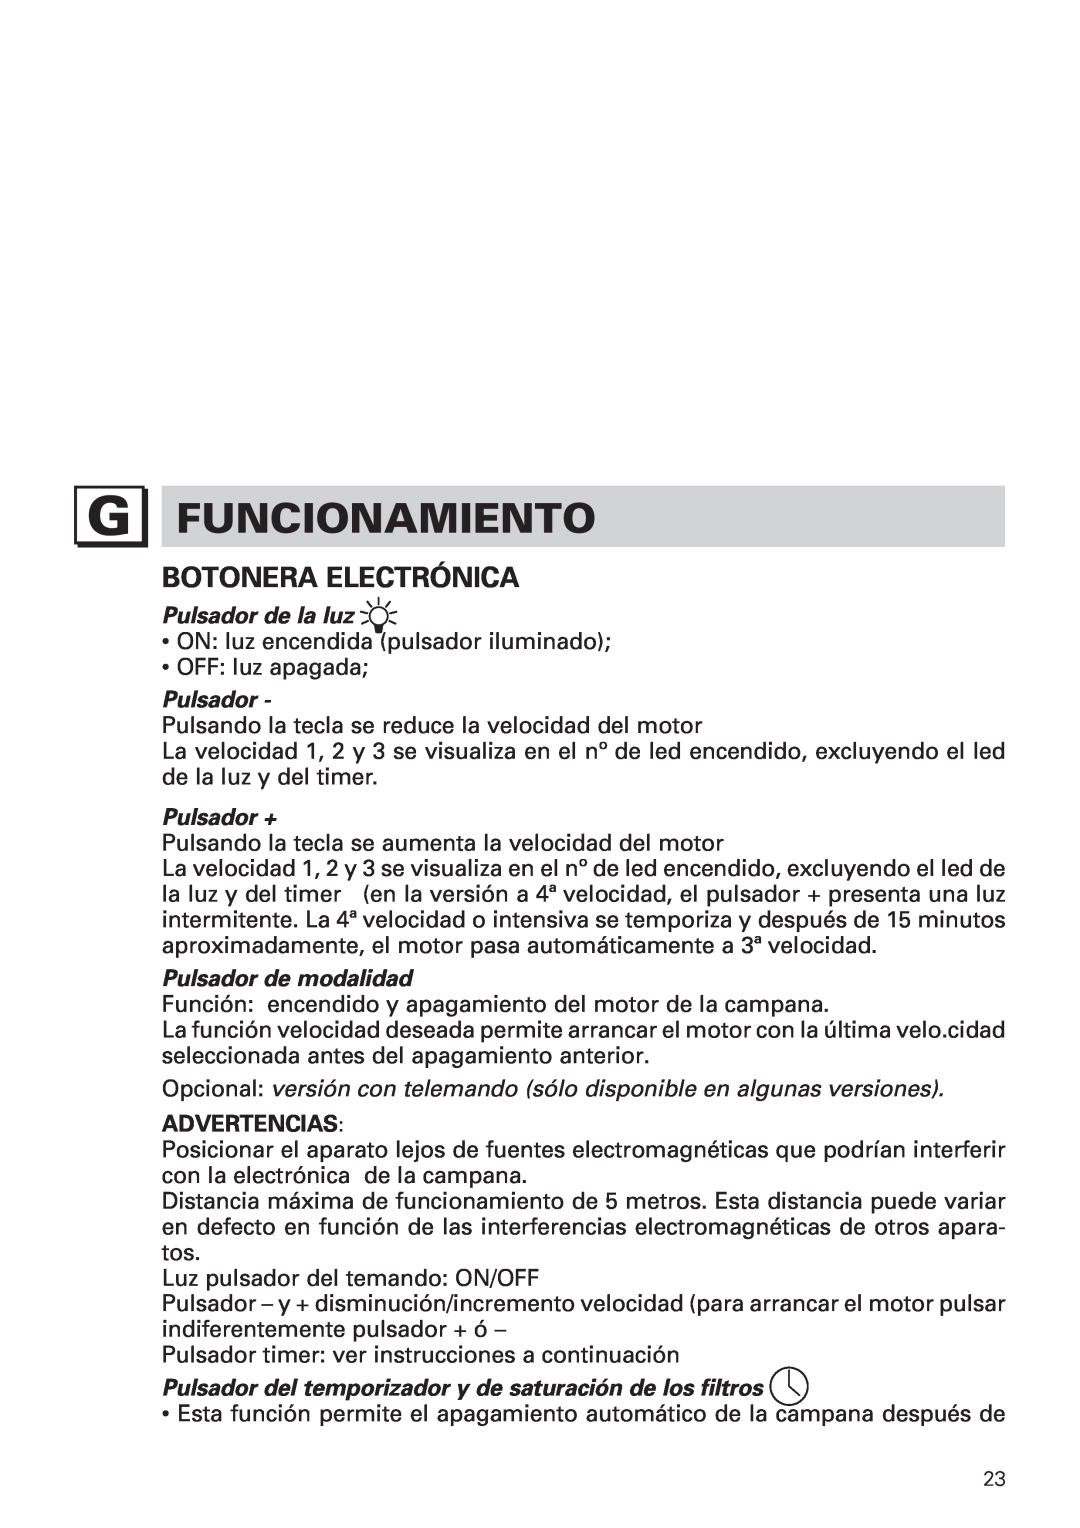 Bertazzoni KIN 36 PER X, KIN 30 PER X manual Funcionamiento, Botonera Electrónica 